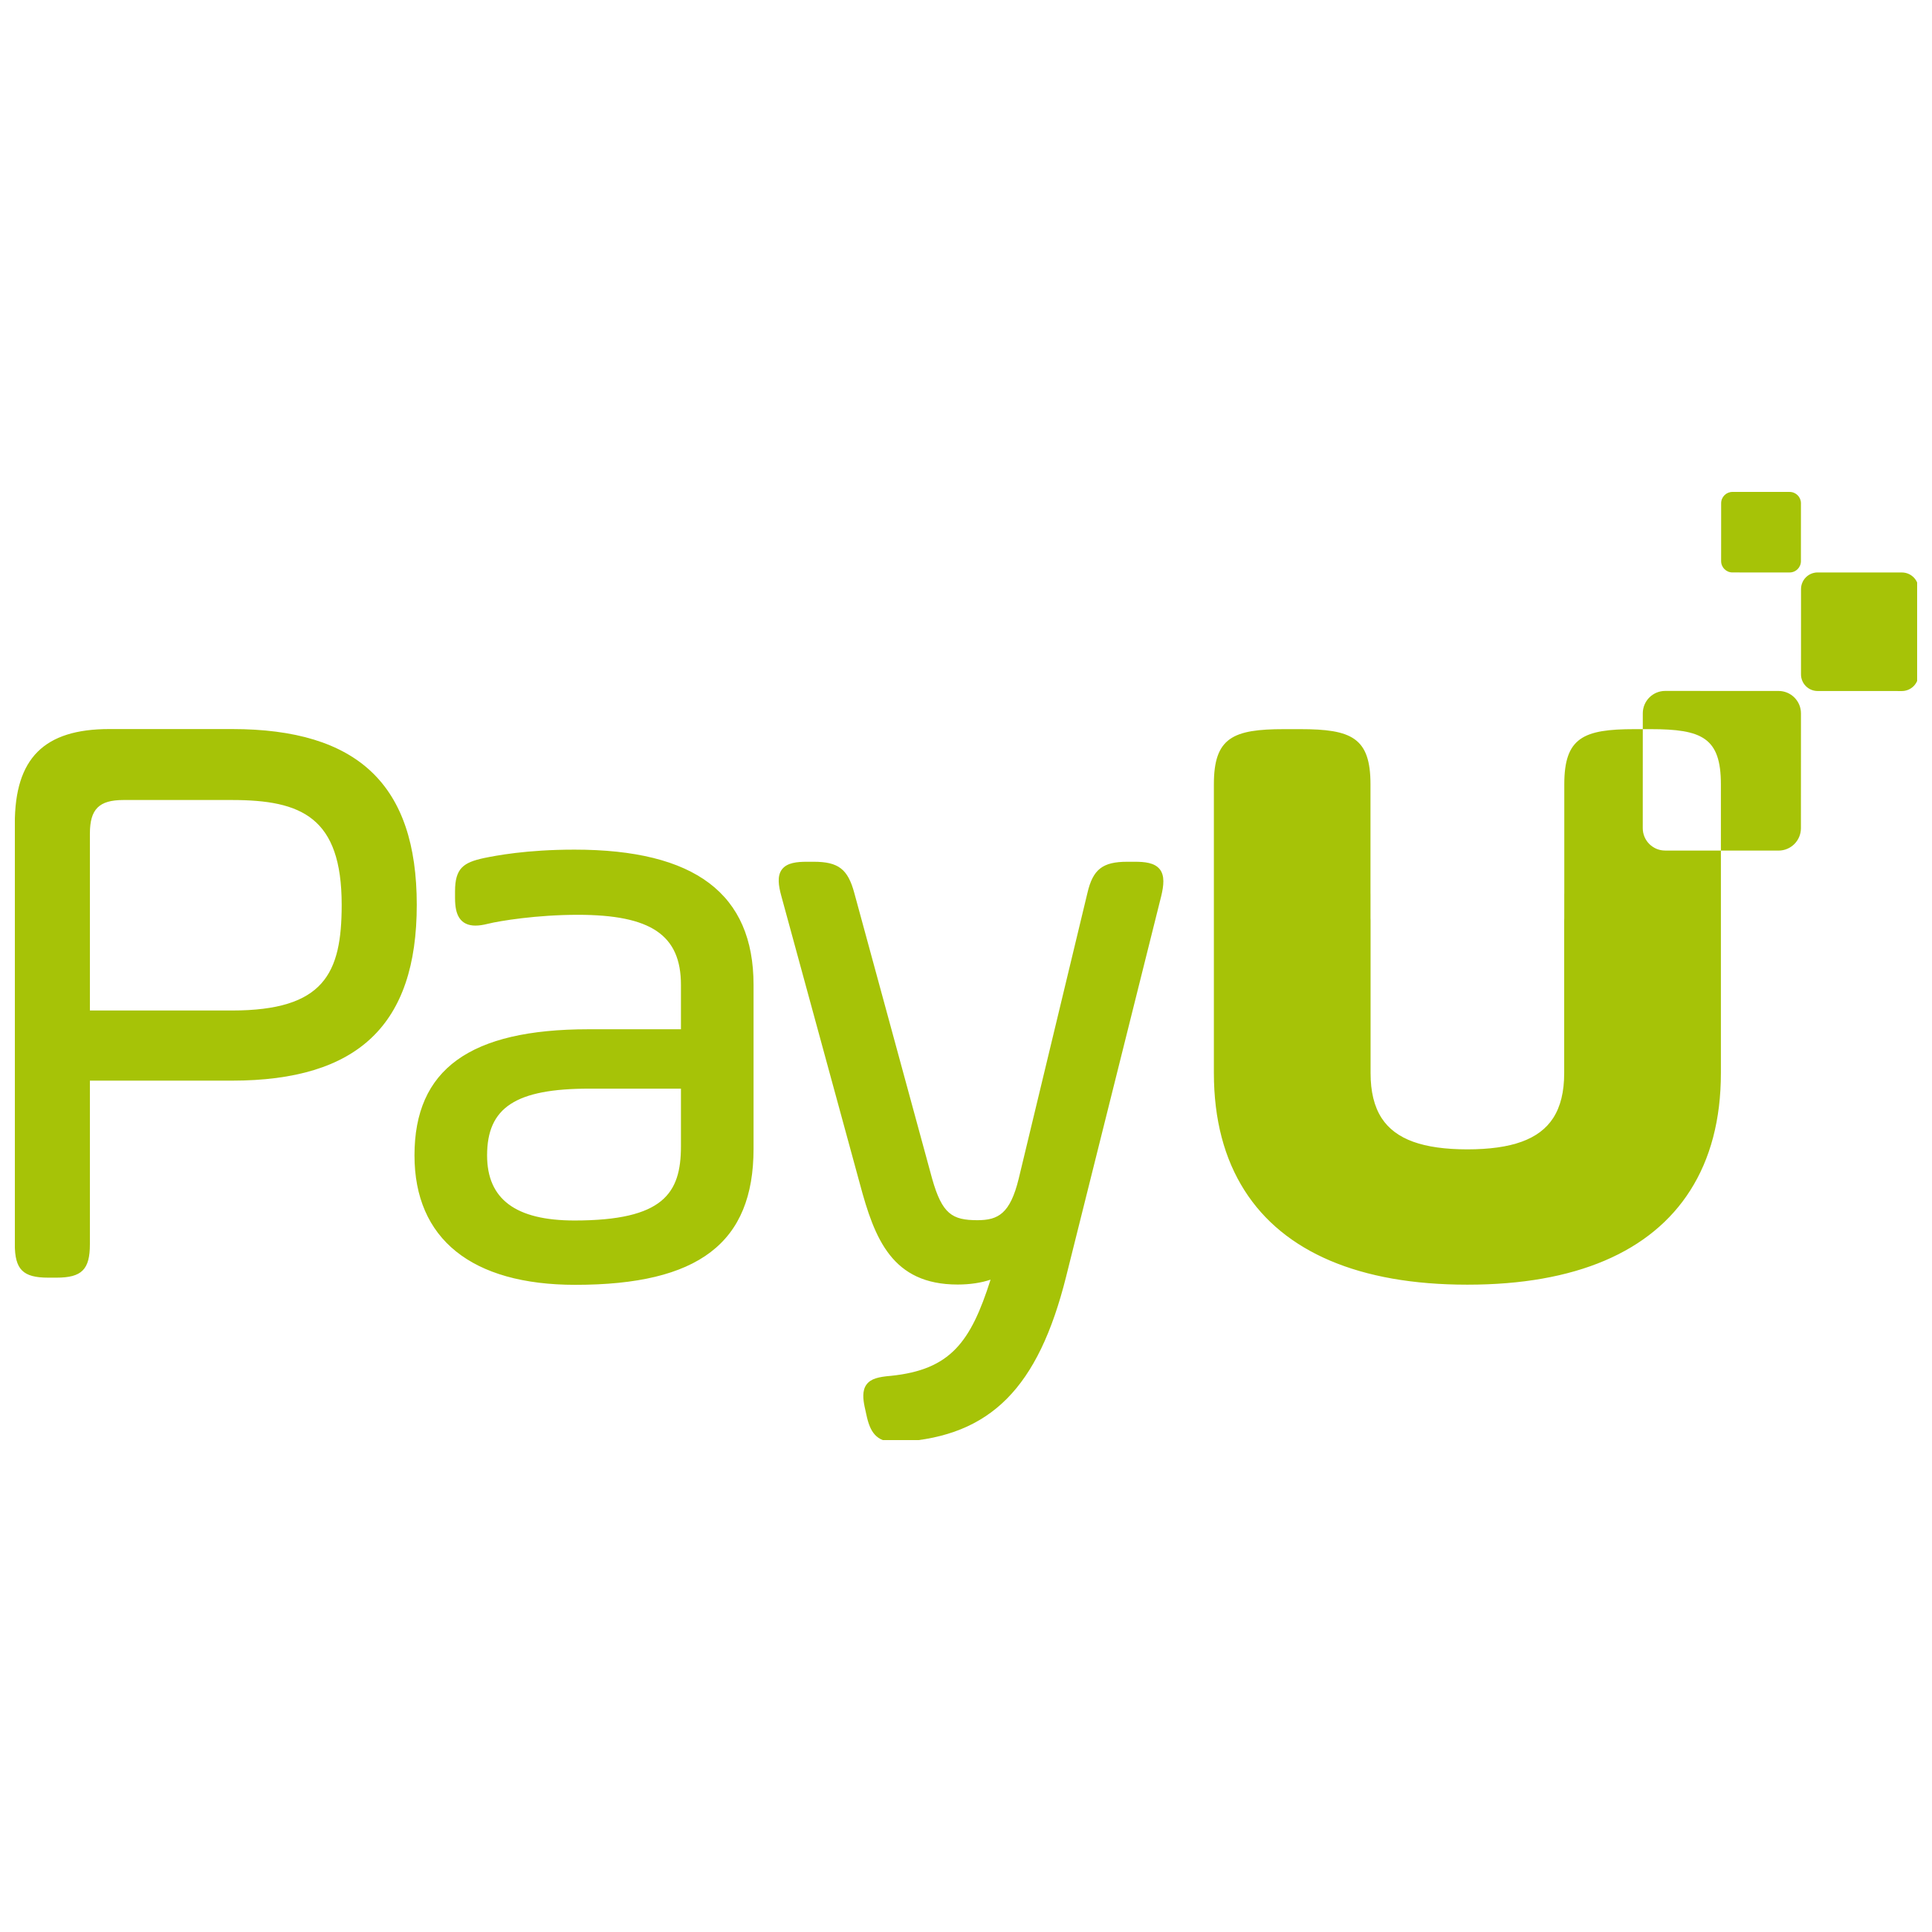 PayU Logo Transparent Image